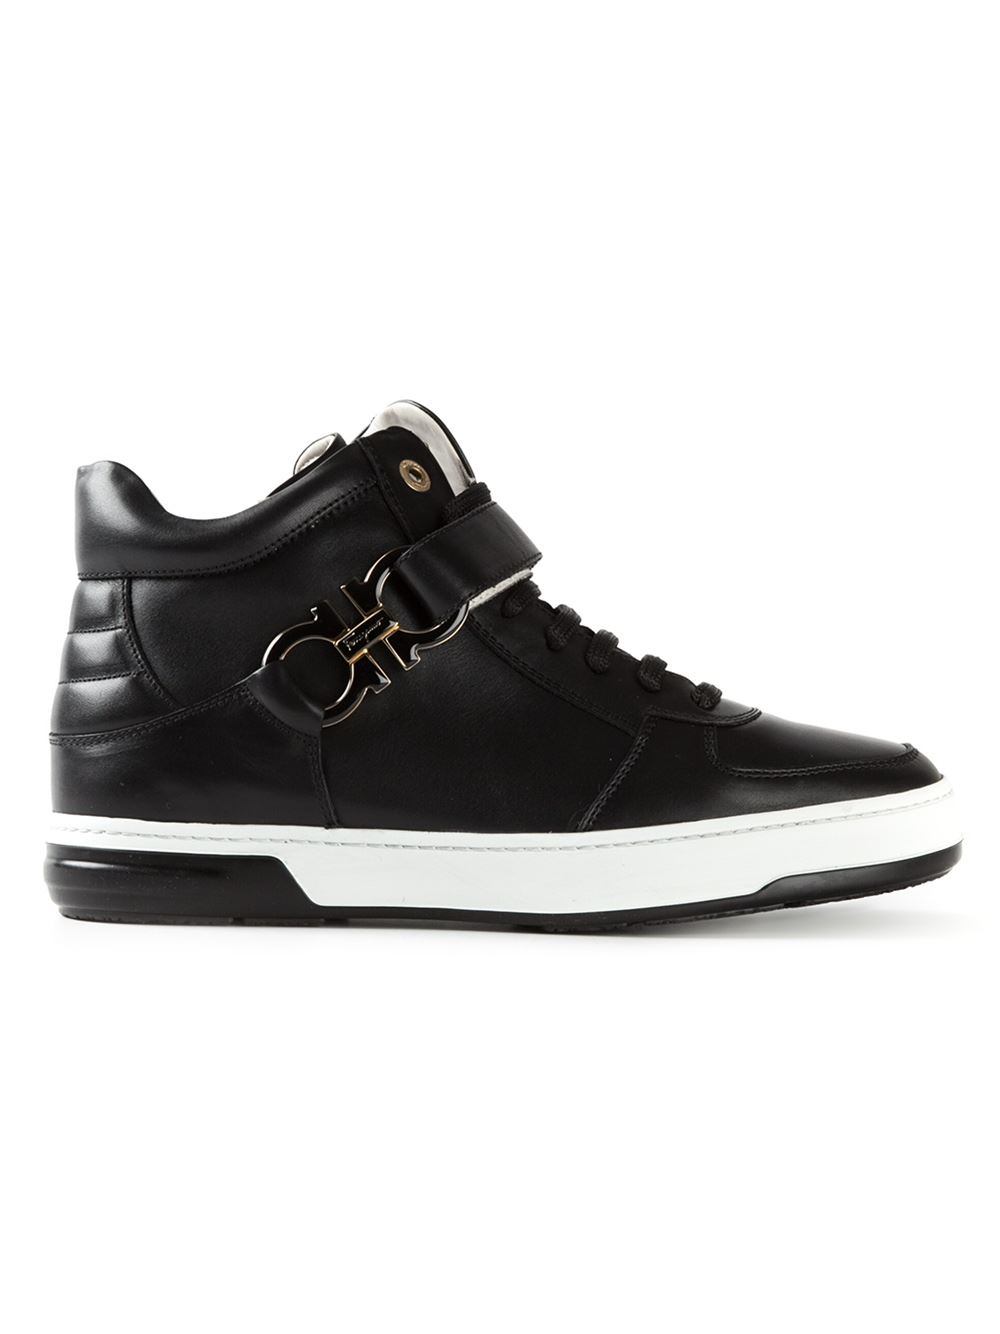 Lyst - Ferragamo 'Nayon' Hi-Top Sneakers in Black